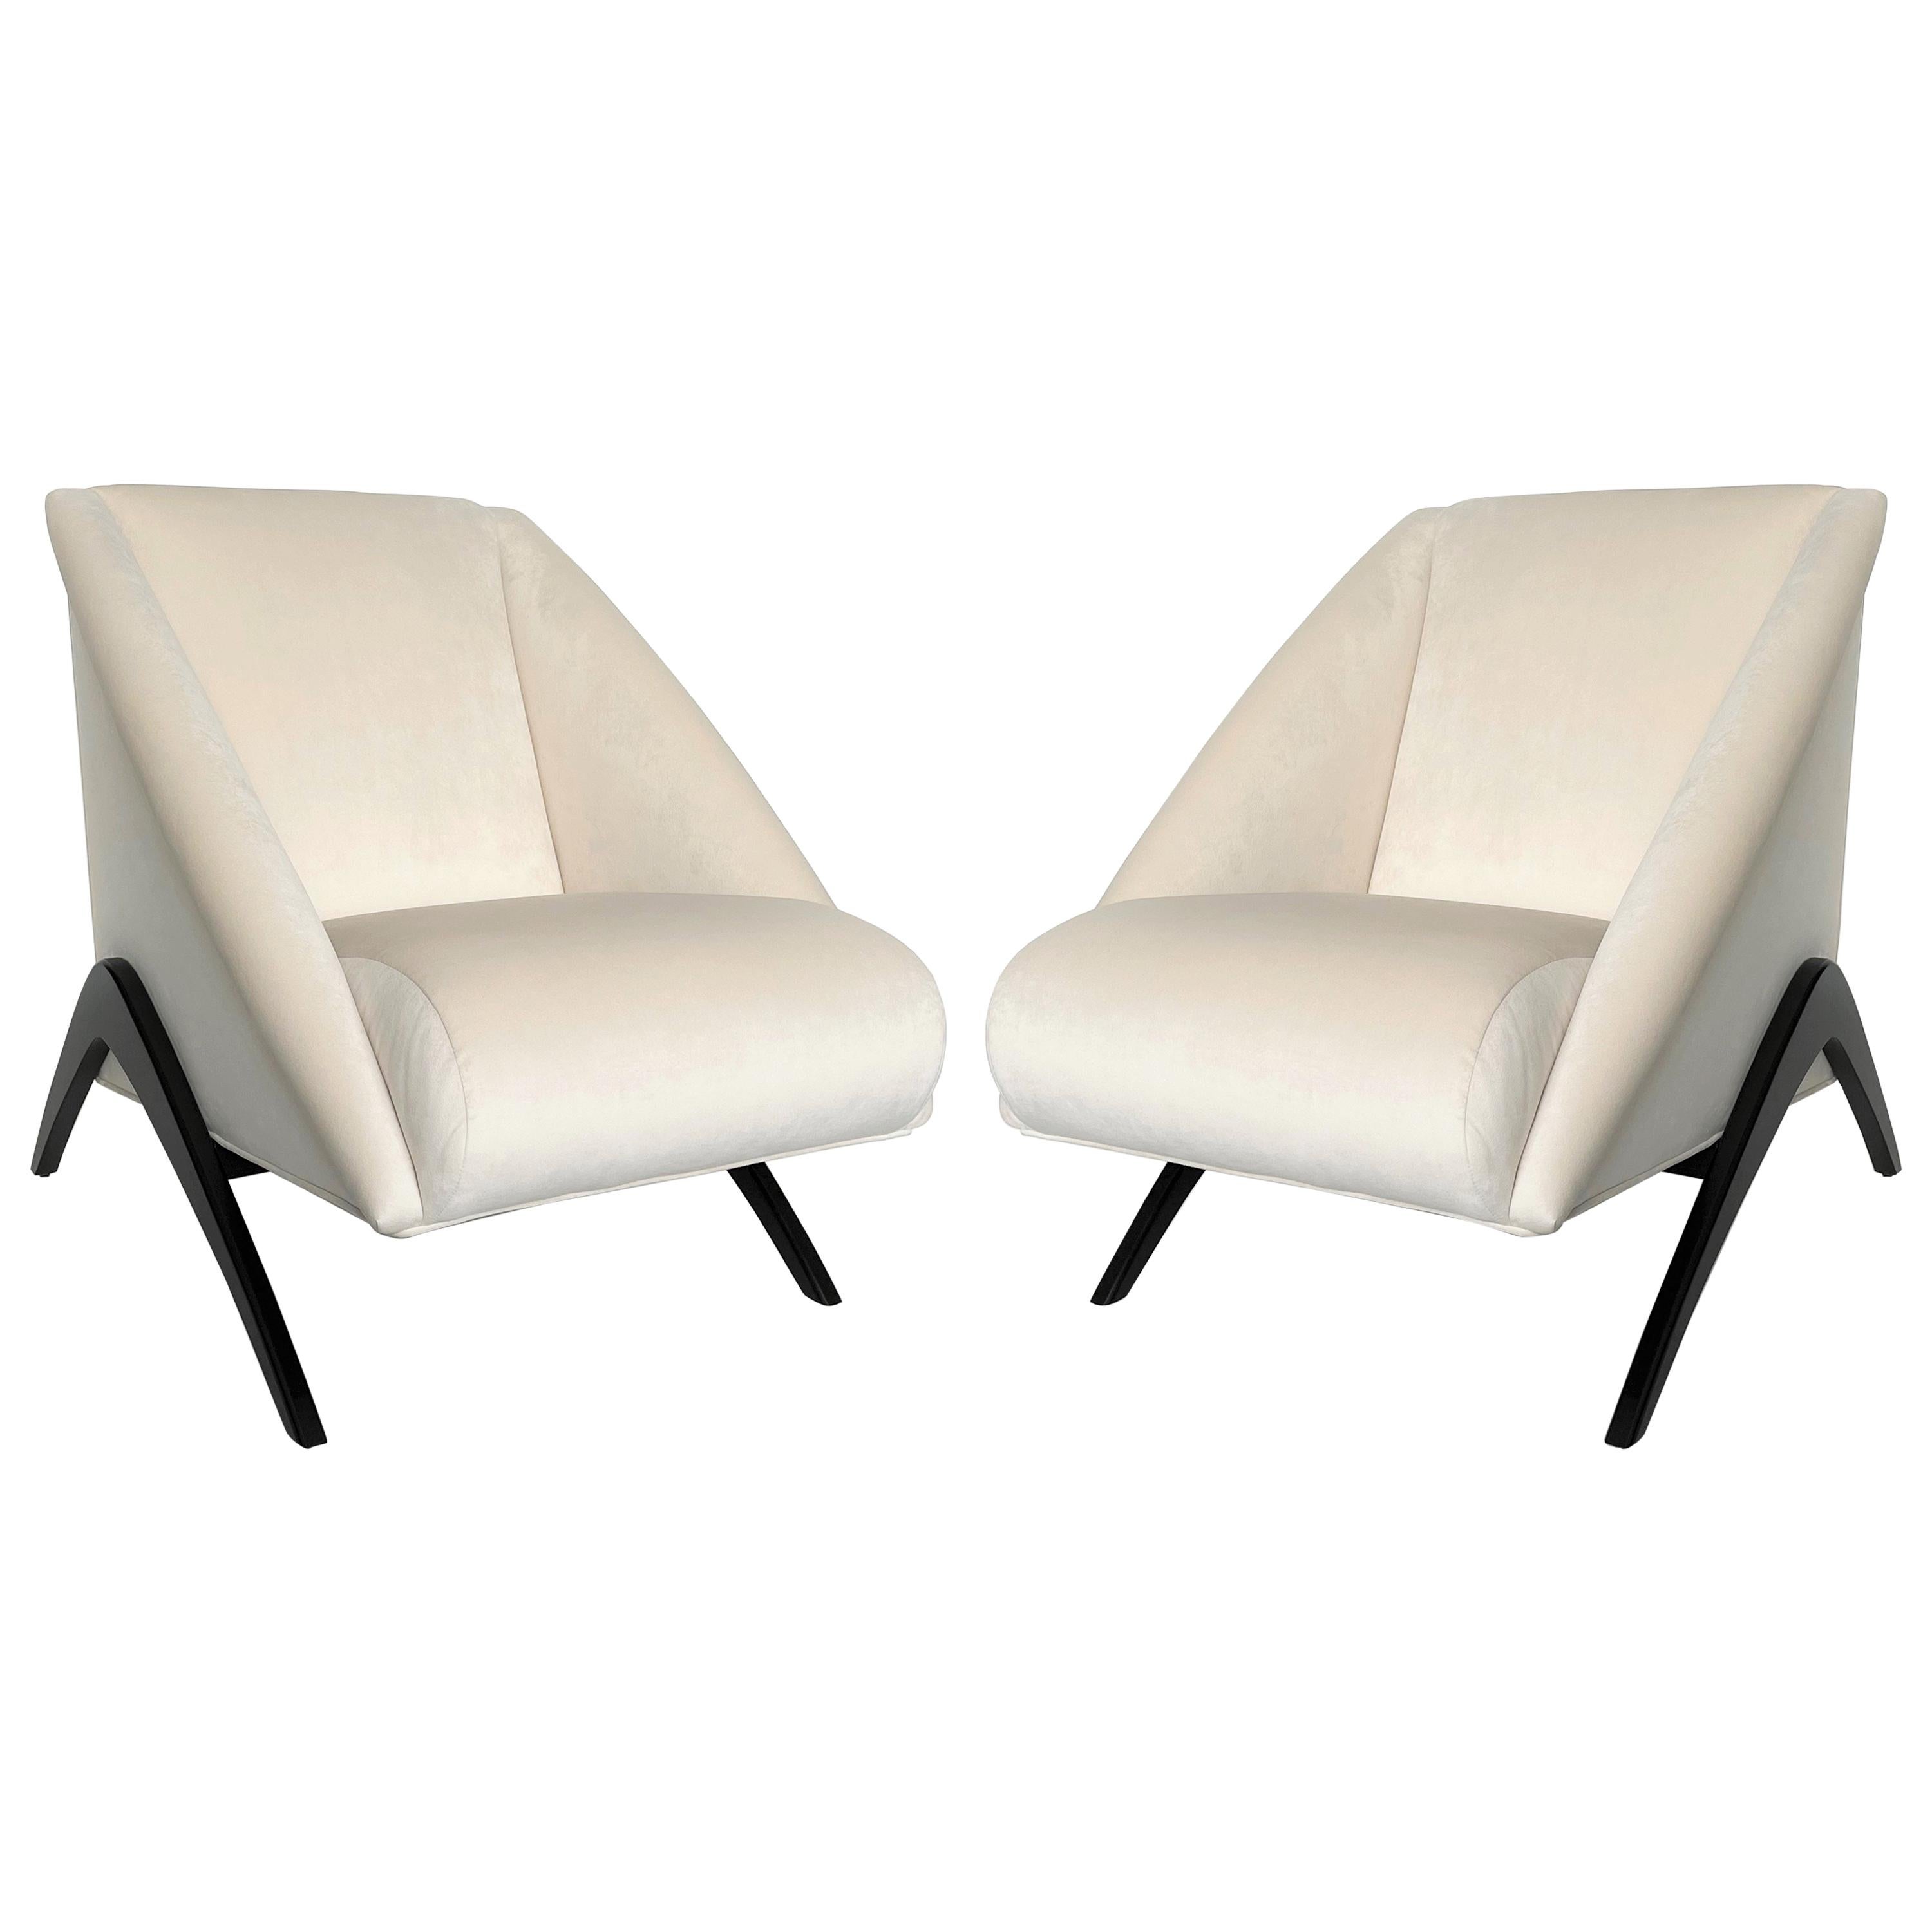 Pair of Geometric Italian Club or Lounge Chairs Attributed to Gio Ponti